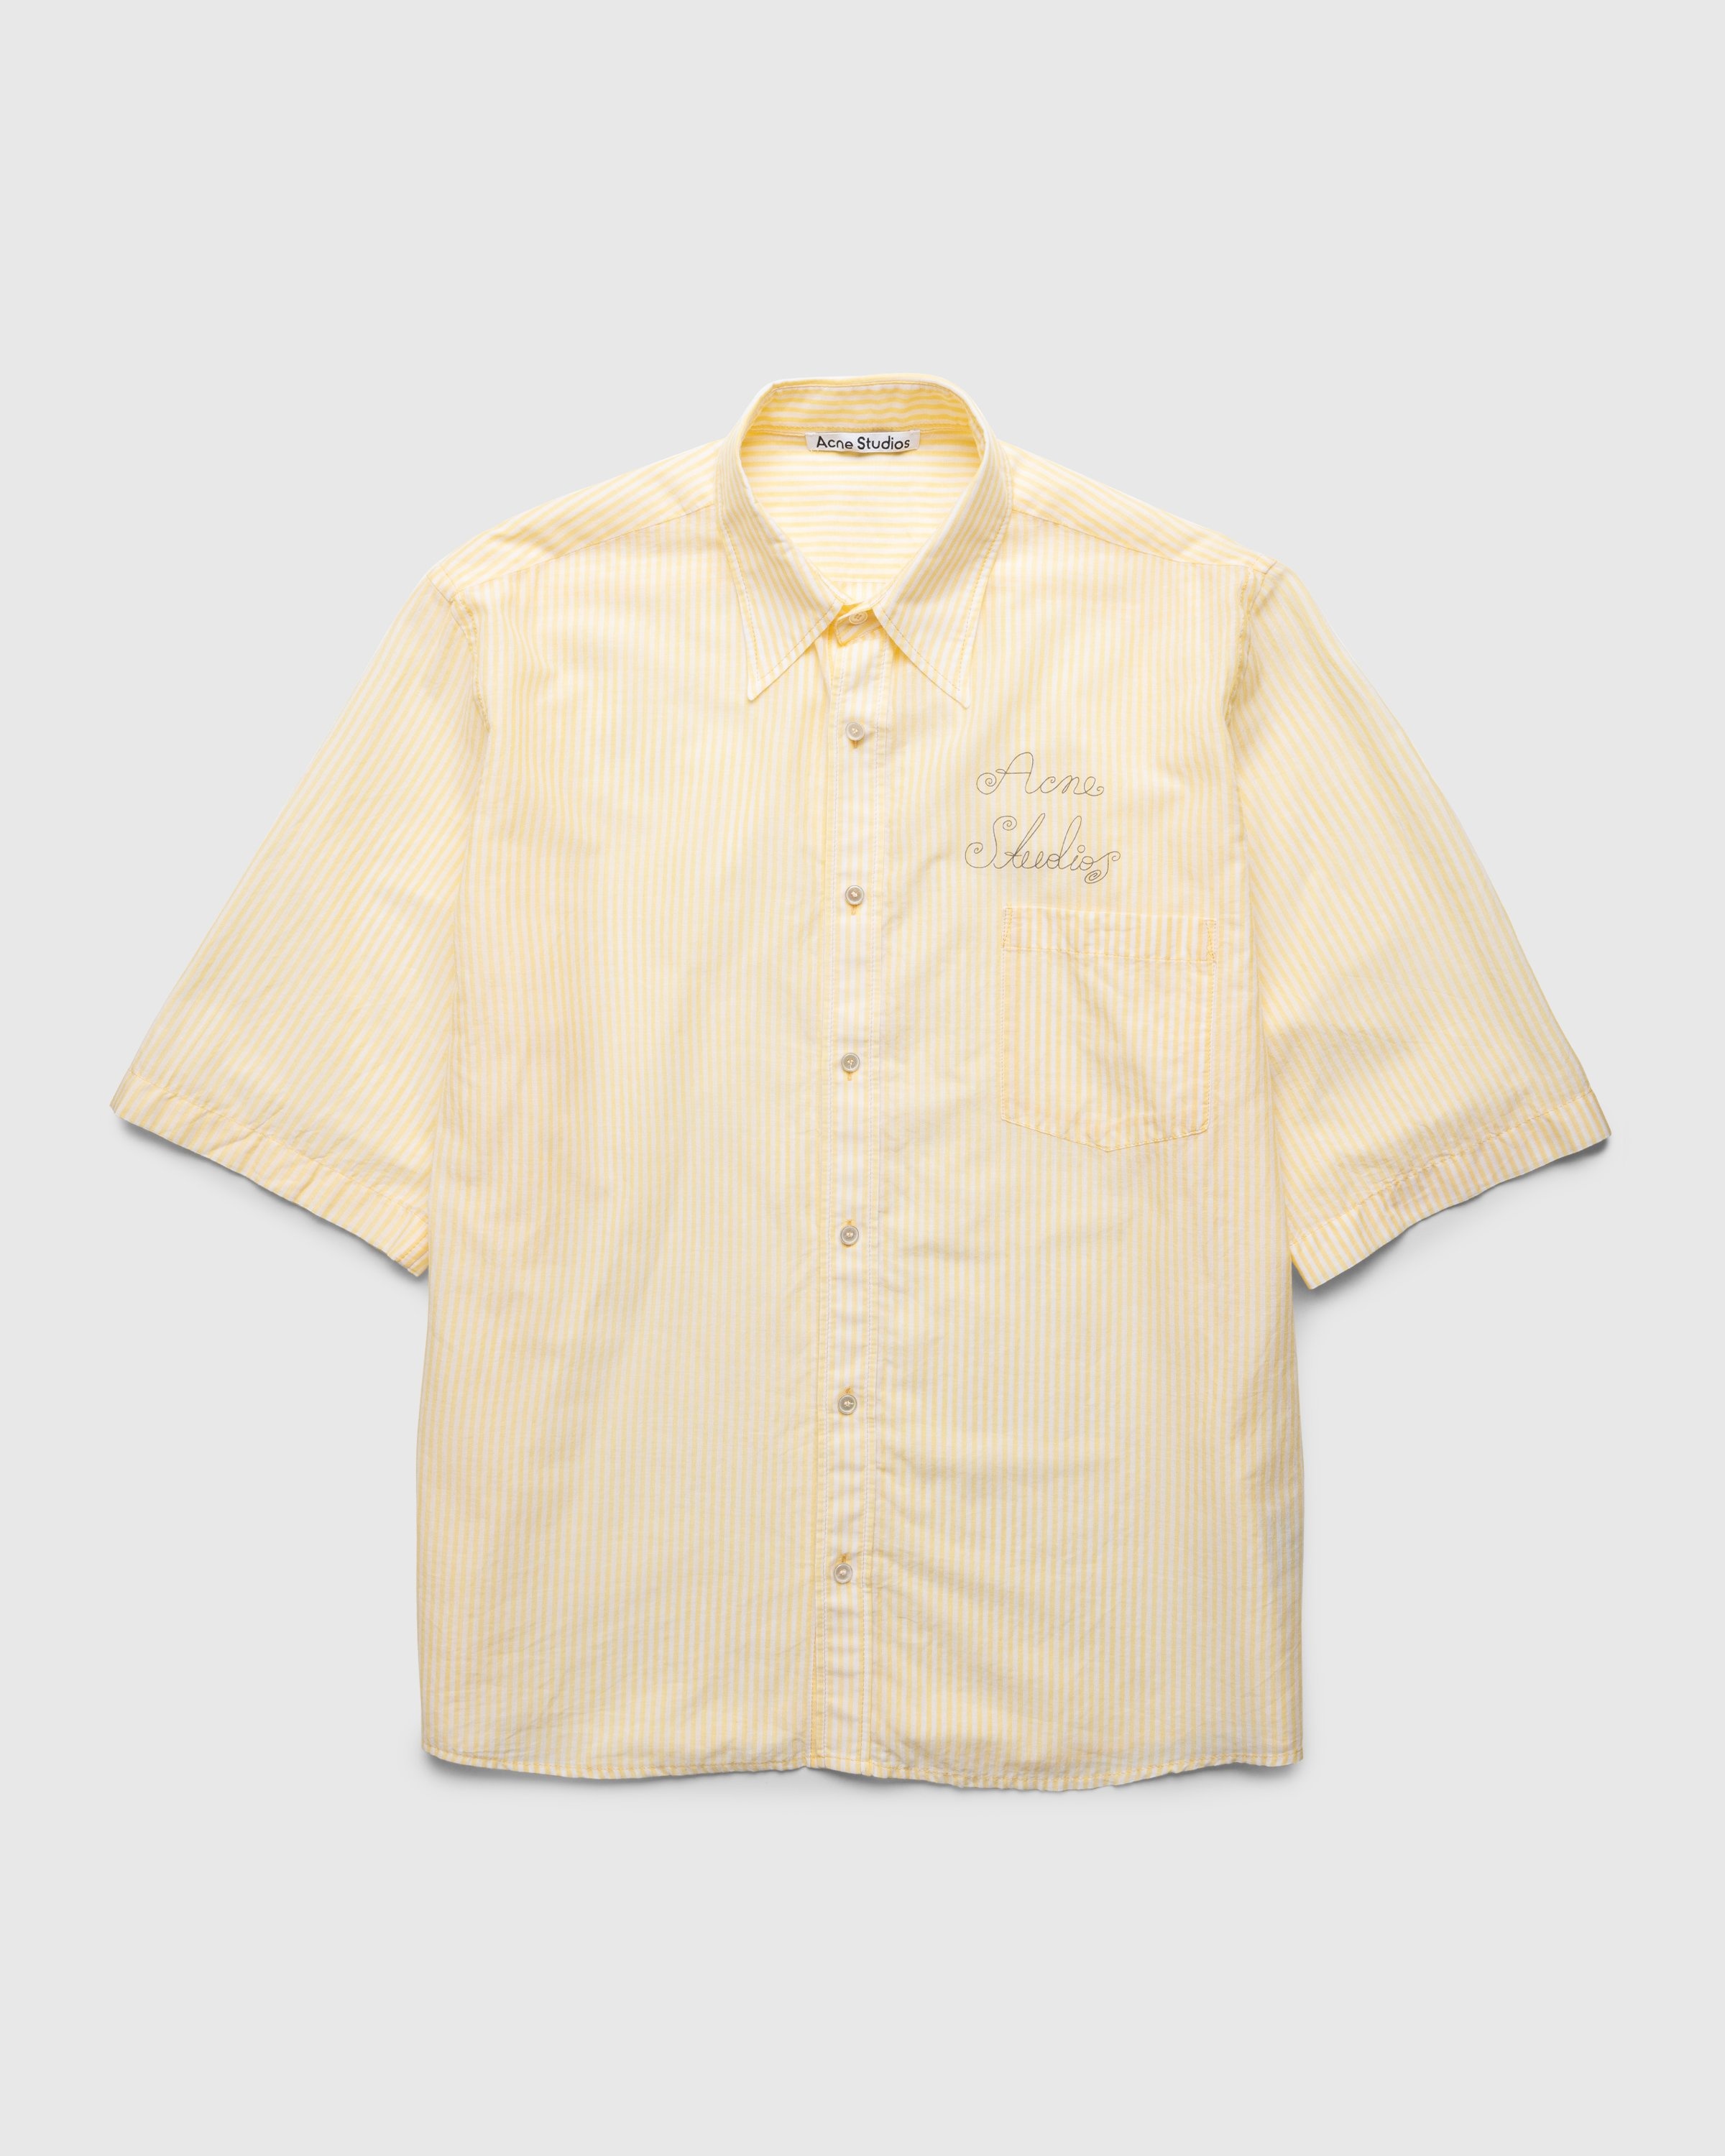 Acne Studios – Short Sleeve Button-Up Shirt Yellow - Shirts - Yellow - Image 1